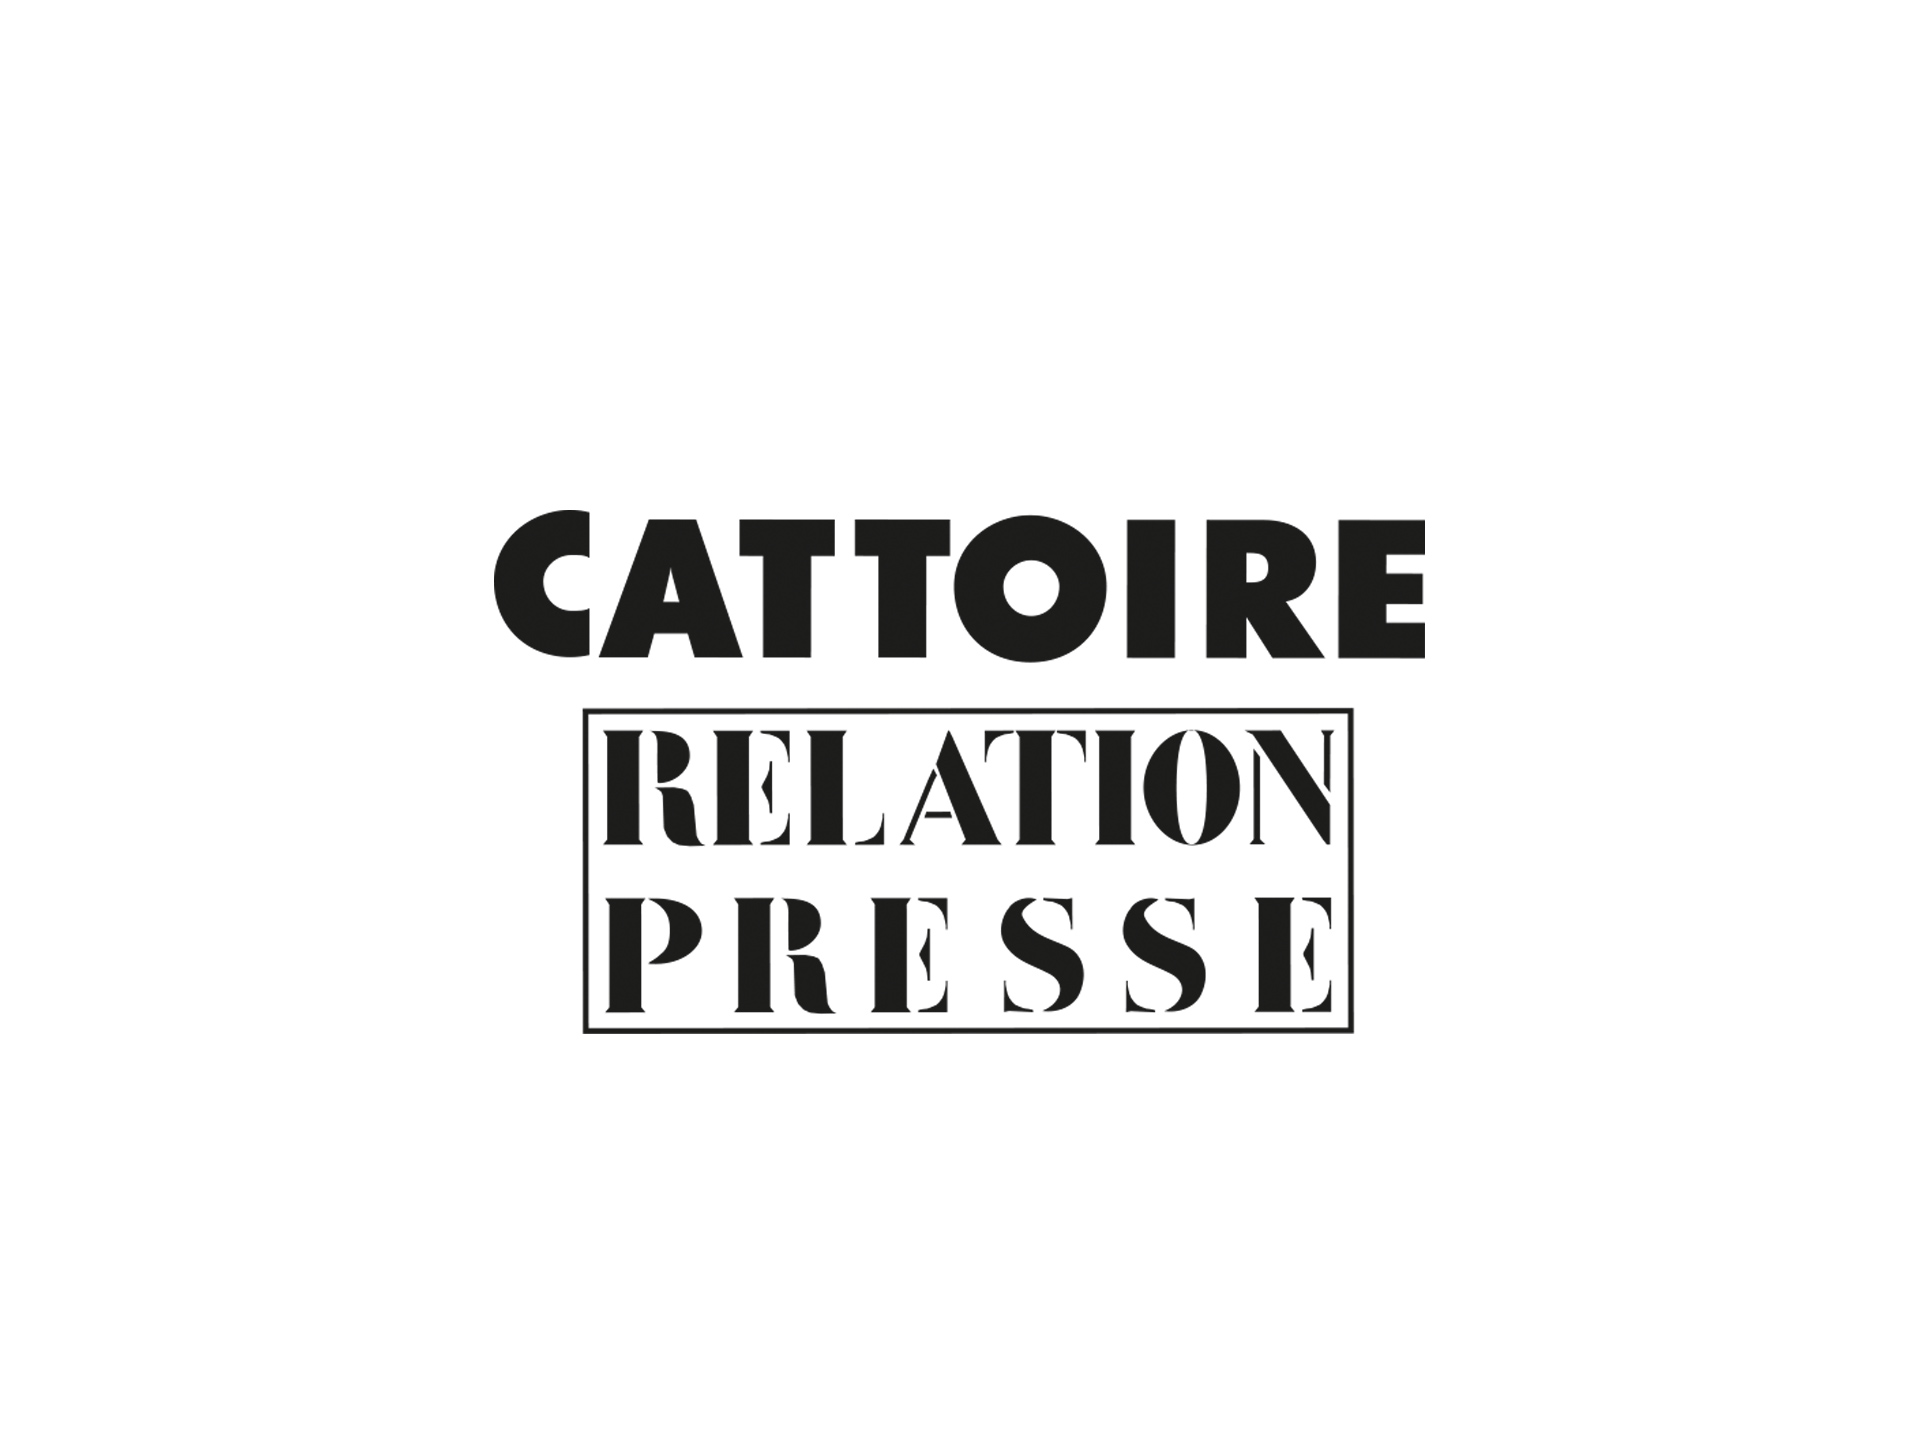 Cattoire, Relation presse